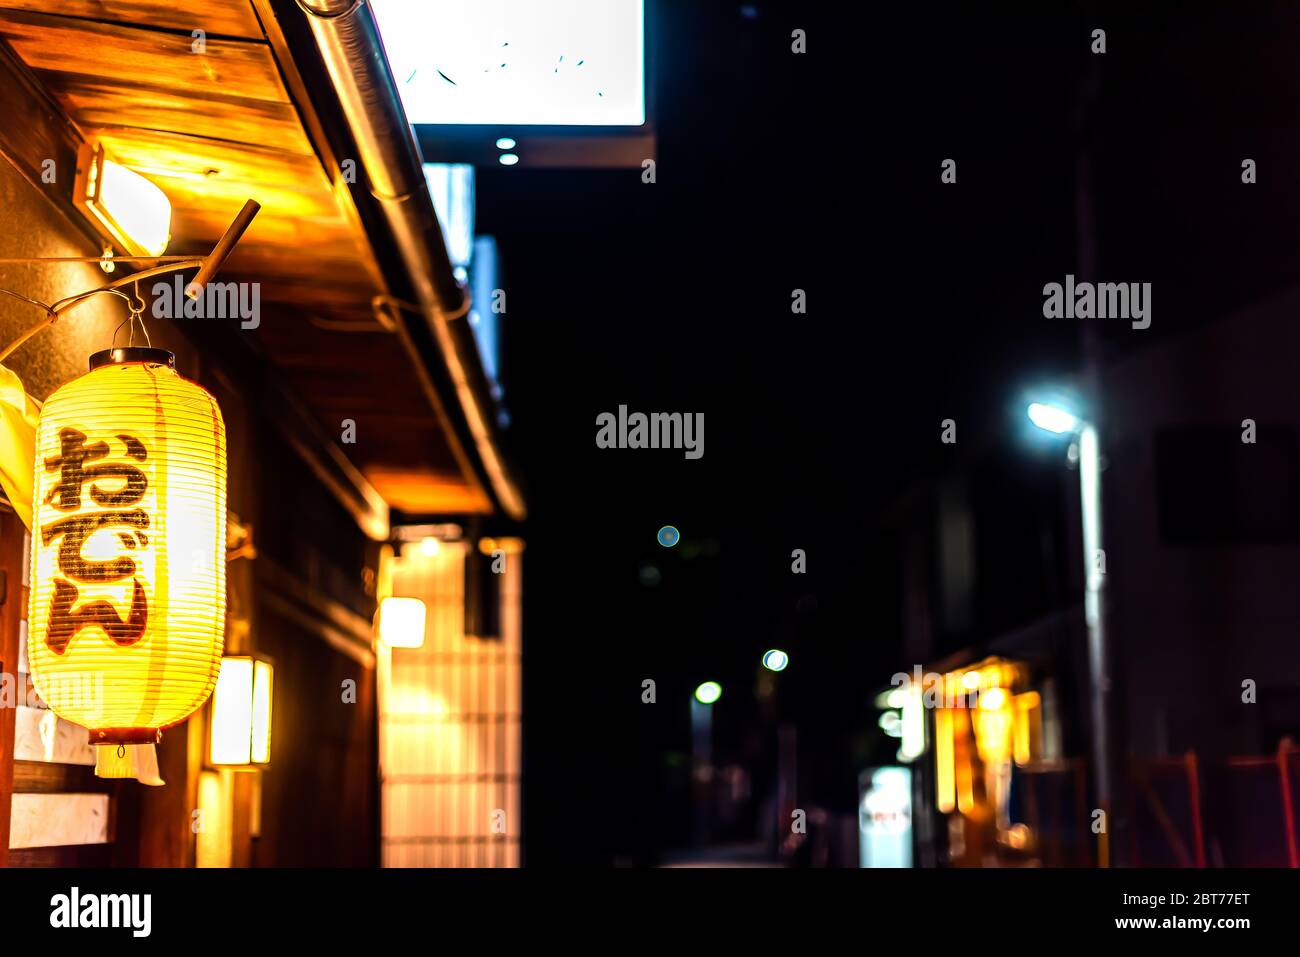 https://c8.alamy.com/comp/2BT77ET/osaka-japan-minami-namba-famous-street-dark-night-and-illuminated-yellow-paper-lanterns-and-generic-sign-for-famous-oden-soup-hot-pot-dish-2BT77ET.jpg